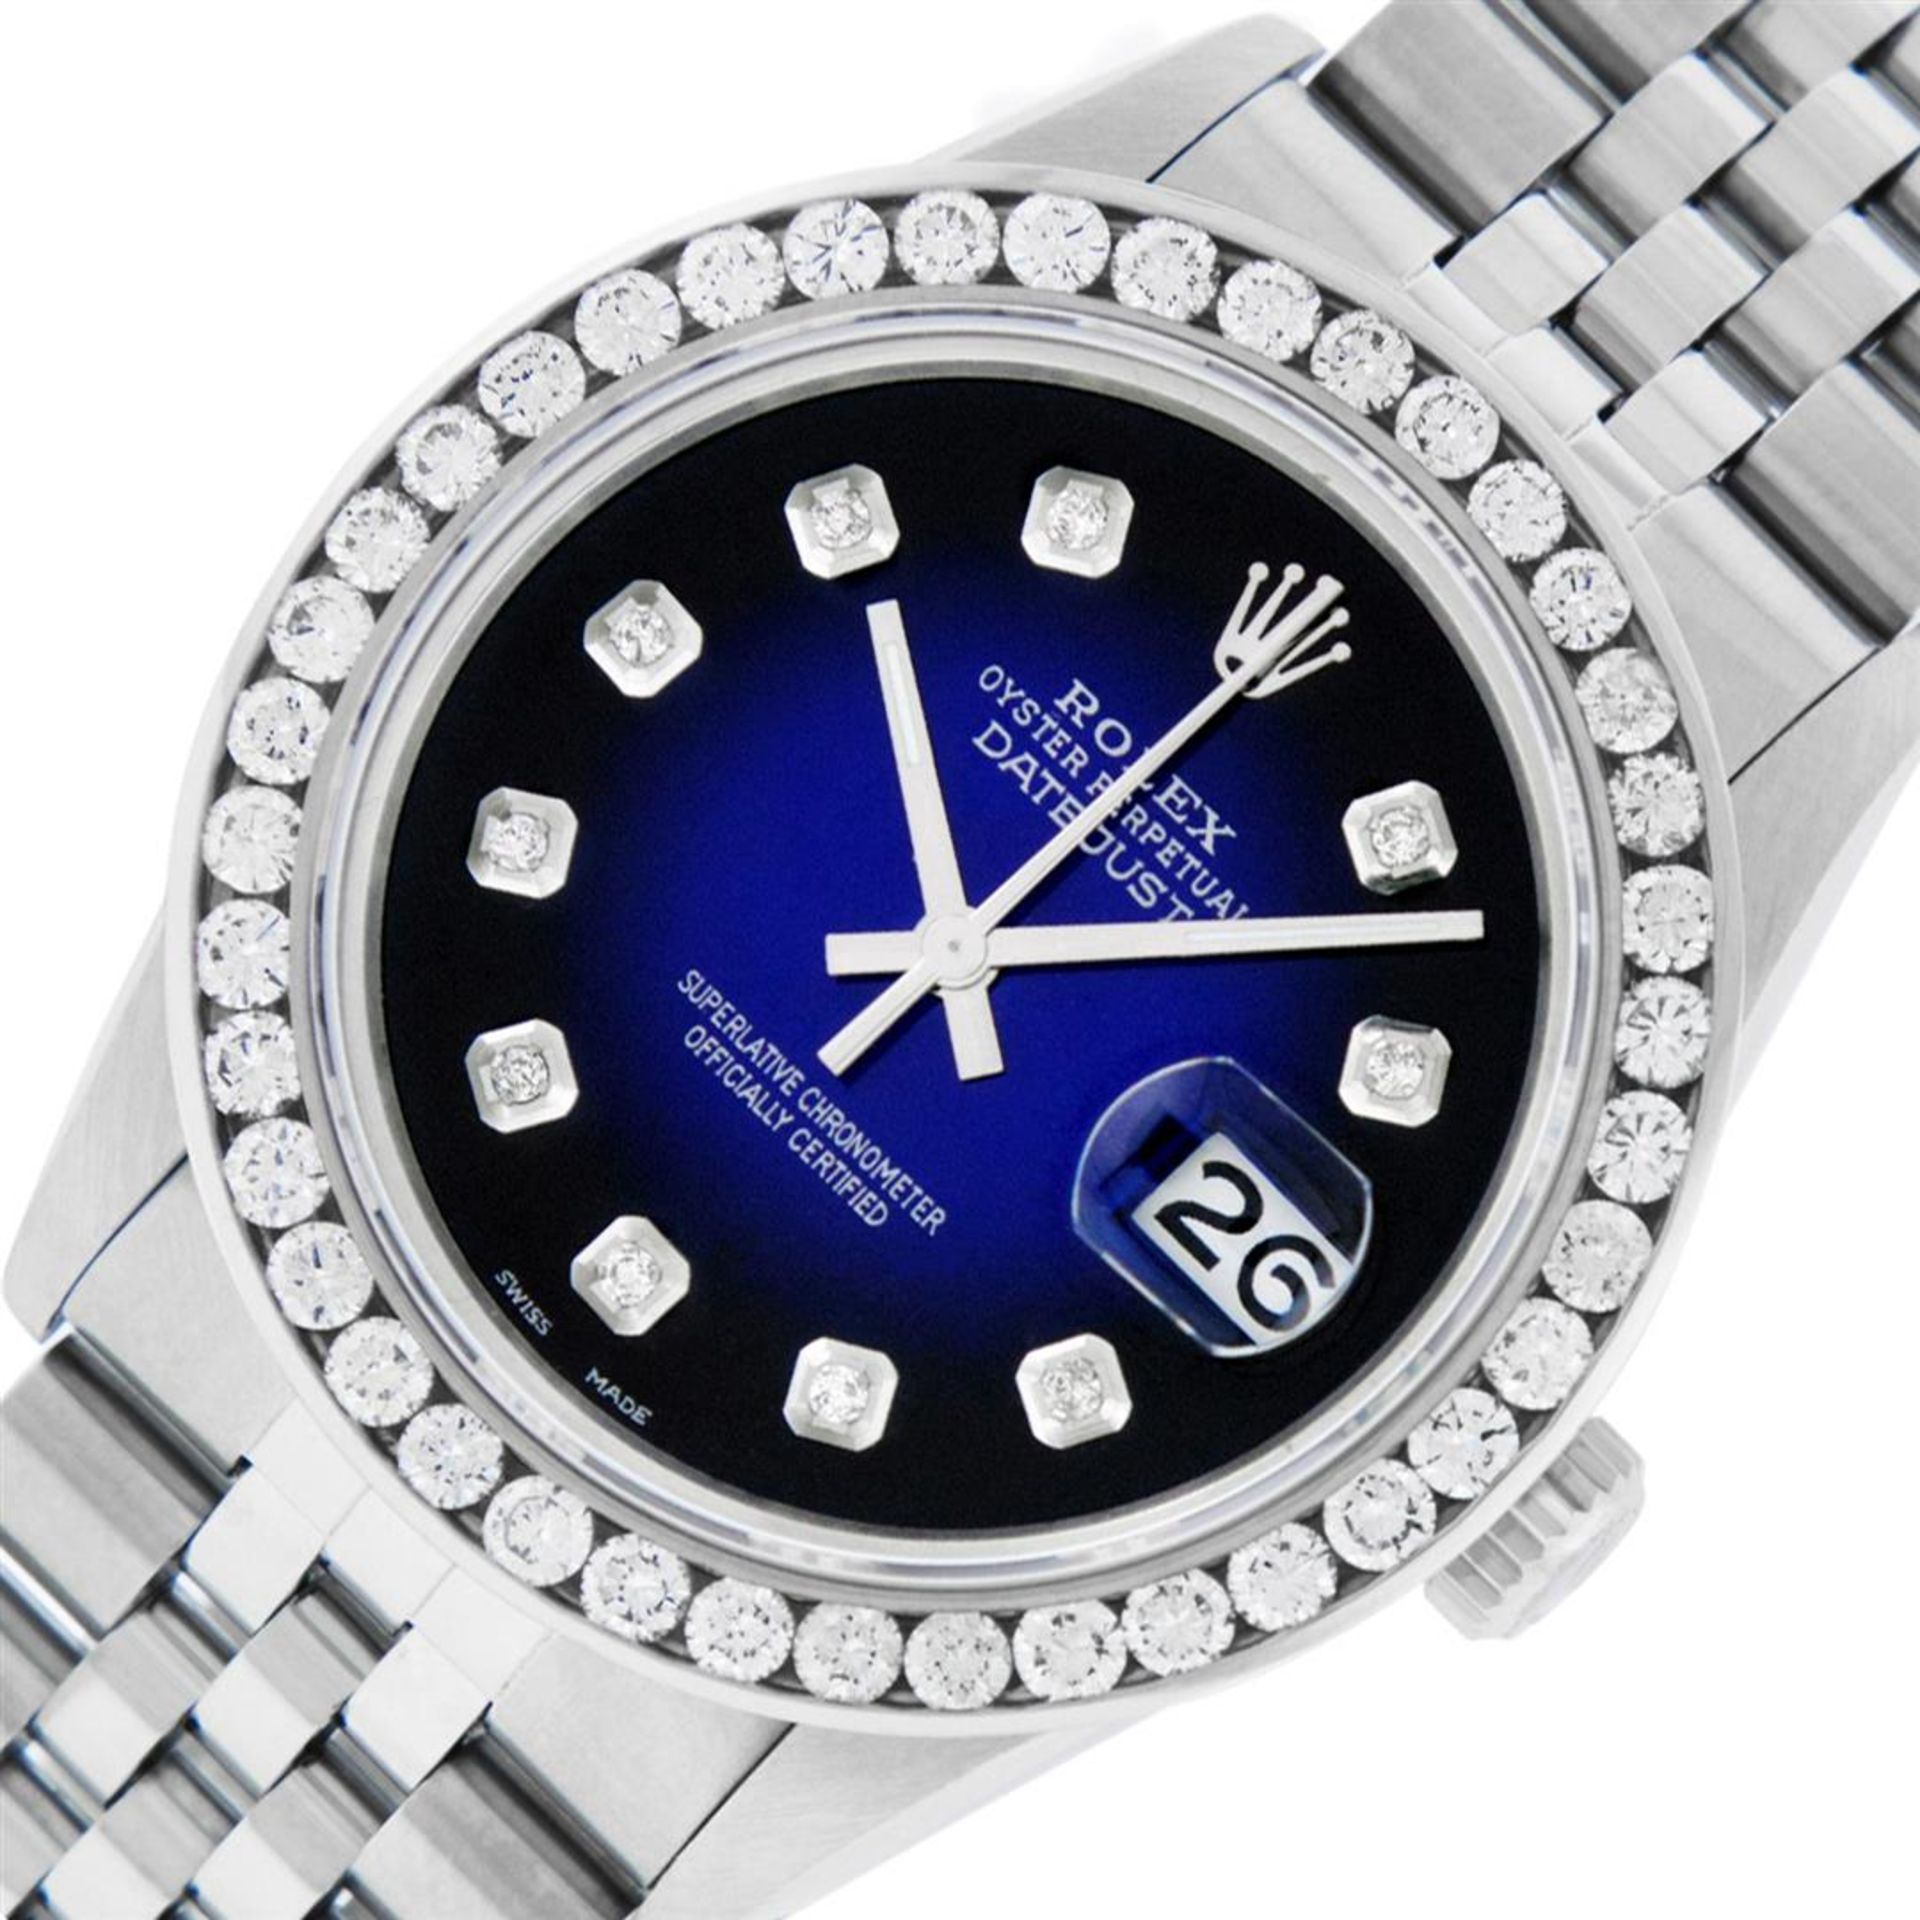 Rolex Mens Stainless Steel Blue Vignette 3 ctw Diamond Datejust Wristwatch - Image 2 of 9